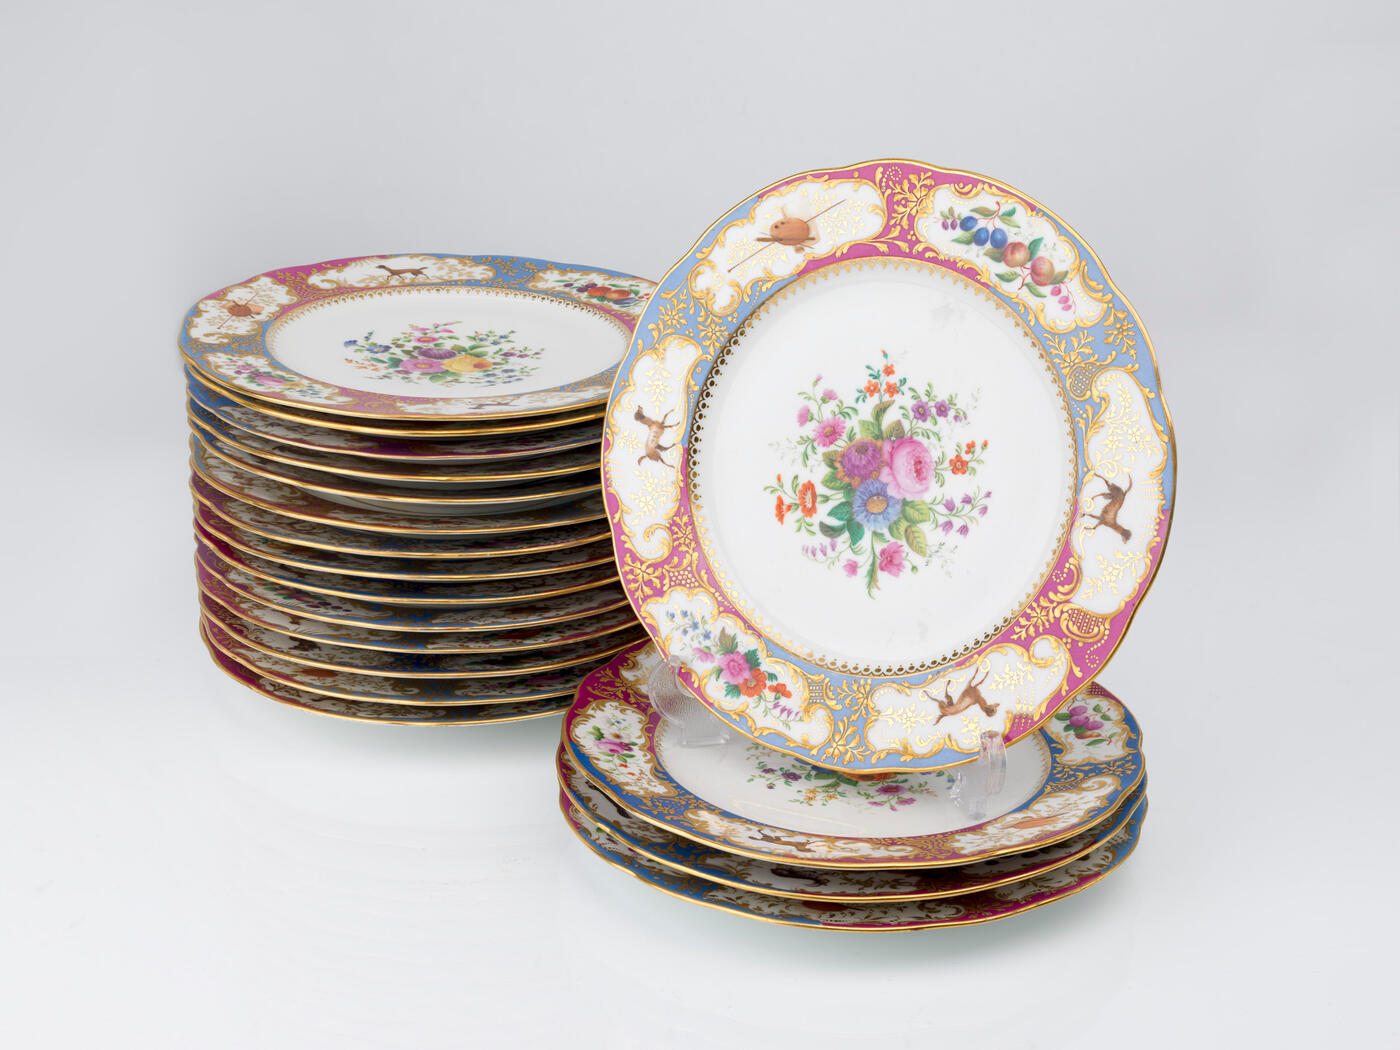 A Set of Eighteen Dinner Plates from the Grand Duke Mikhail Pavlovich Service